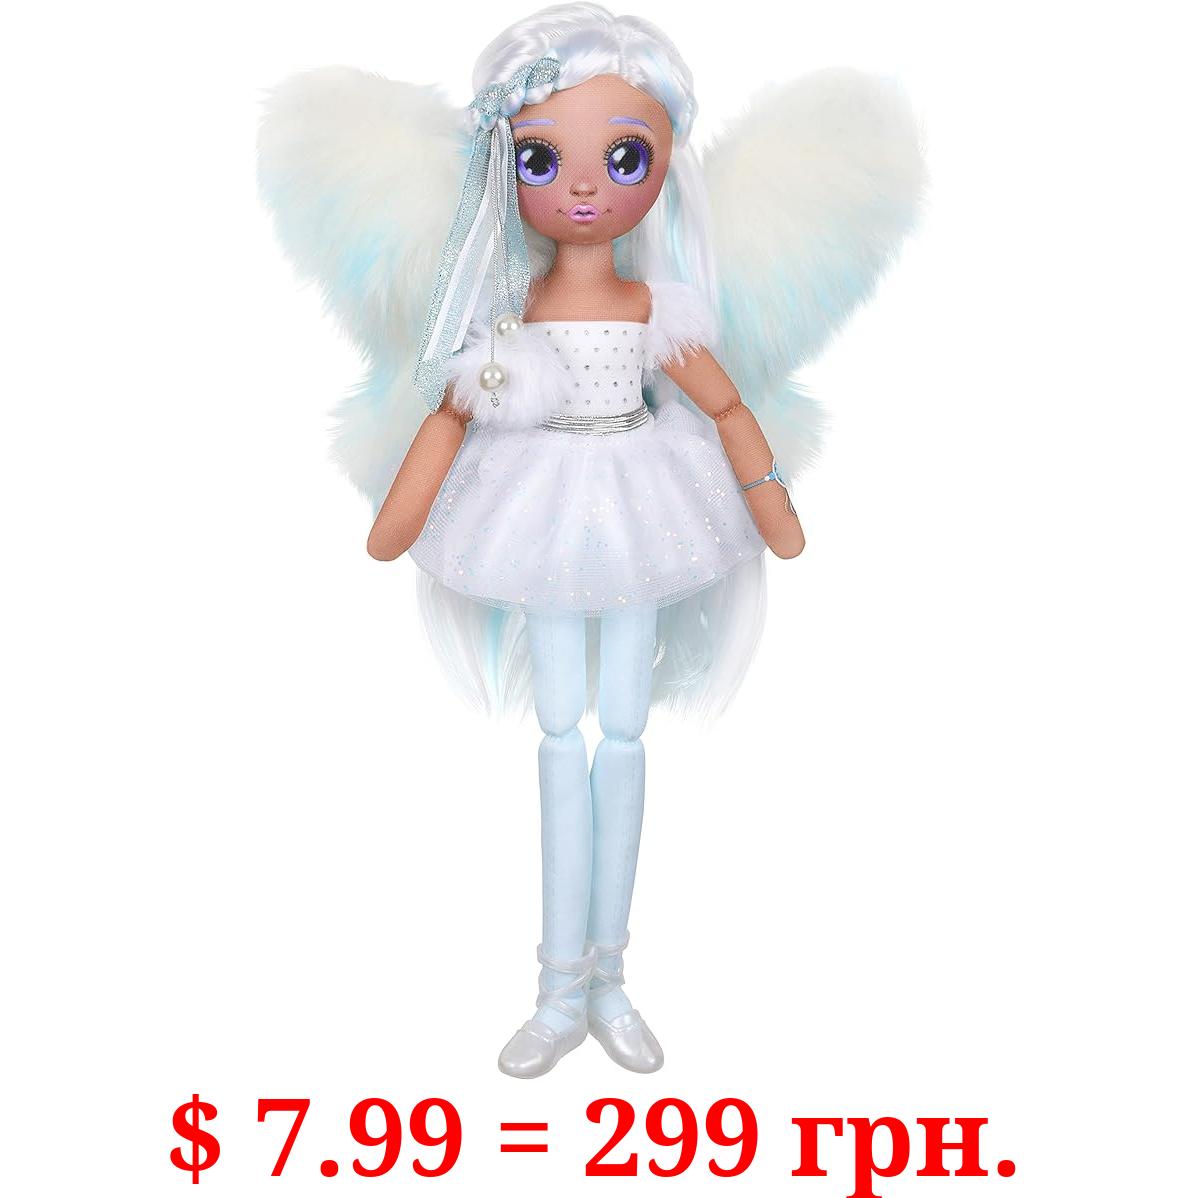 Dream Seekers Doll Single Pack – 1pc Toy | Magical Fairy Fashion Doll Luna